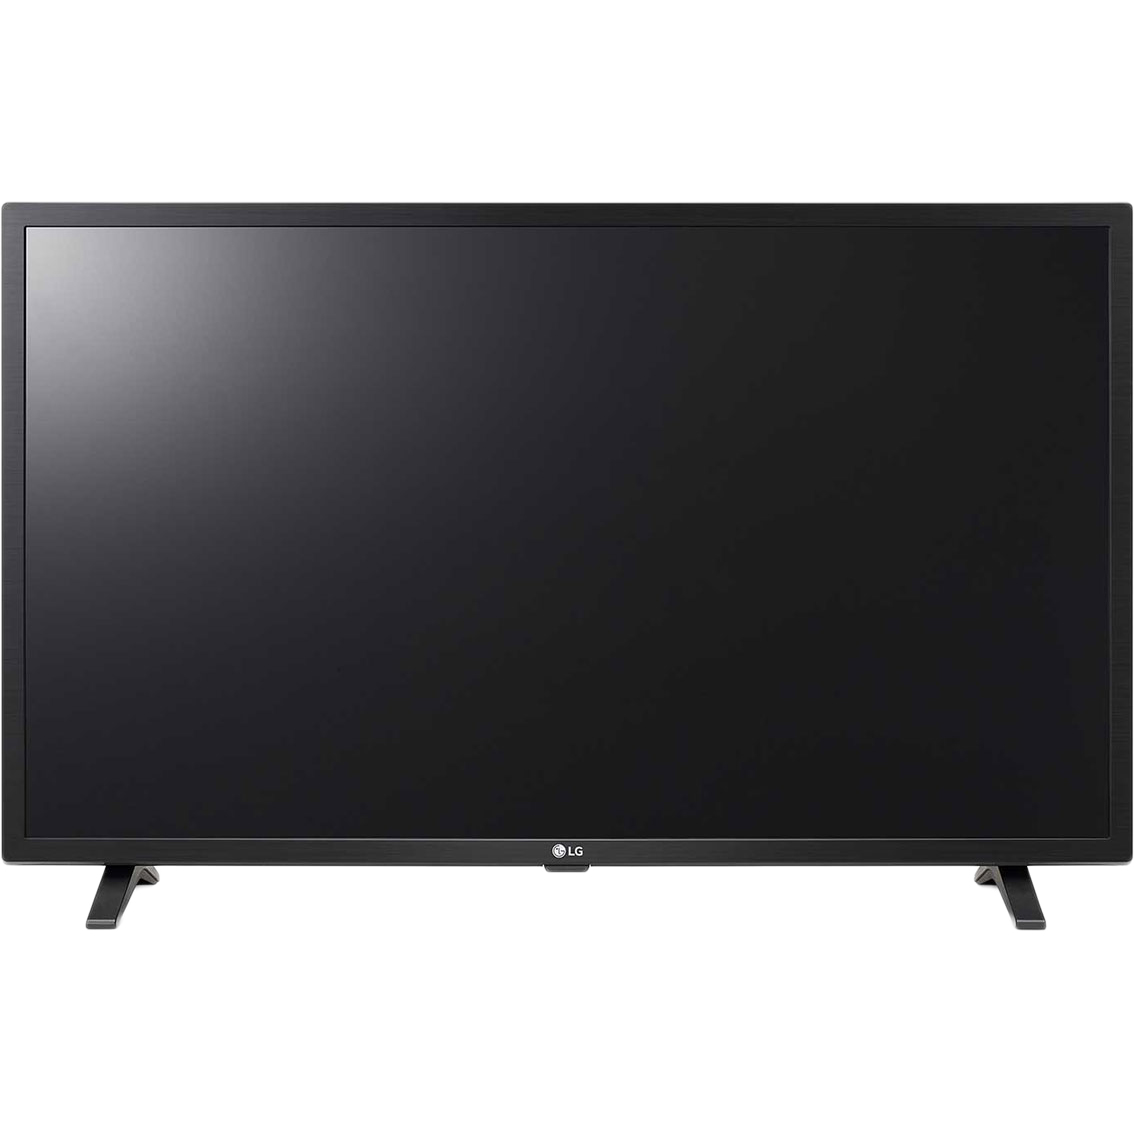 Телевизор LG 32LM6350, цвет черный - фото 2